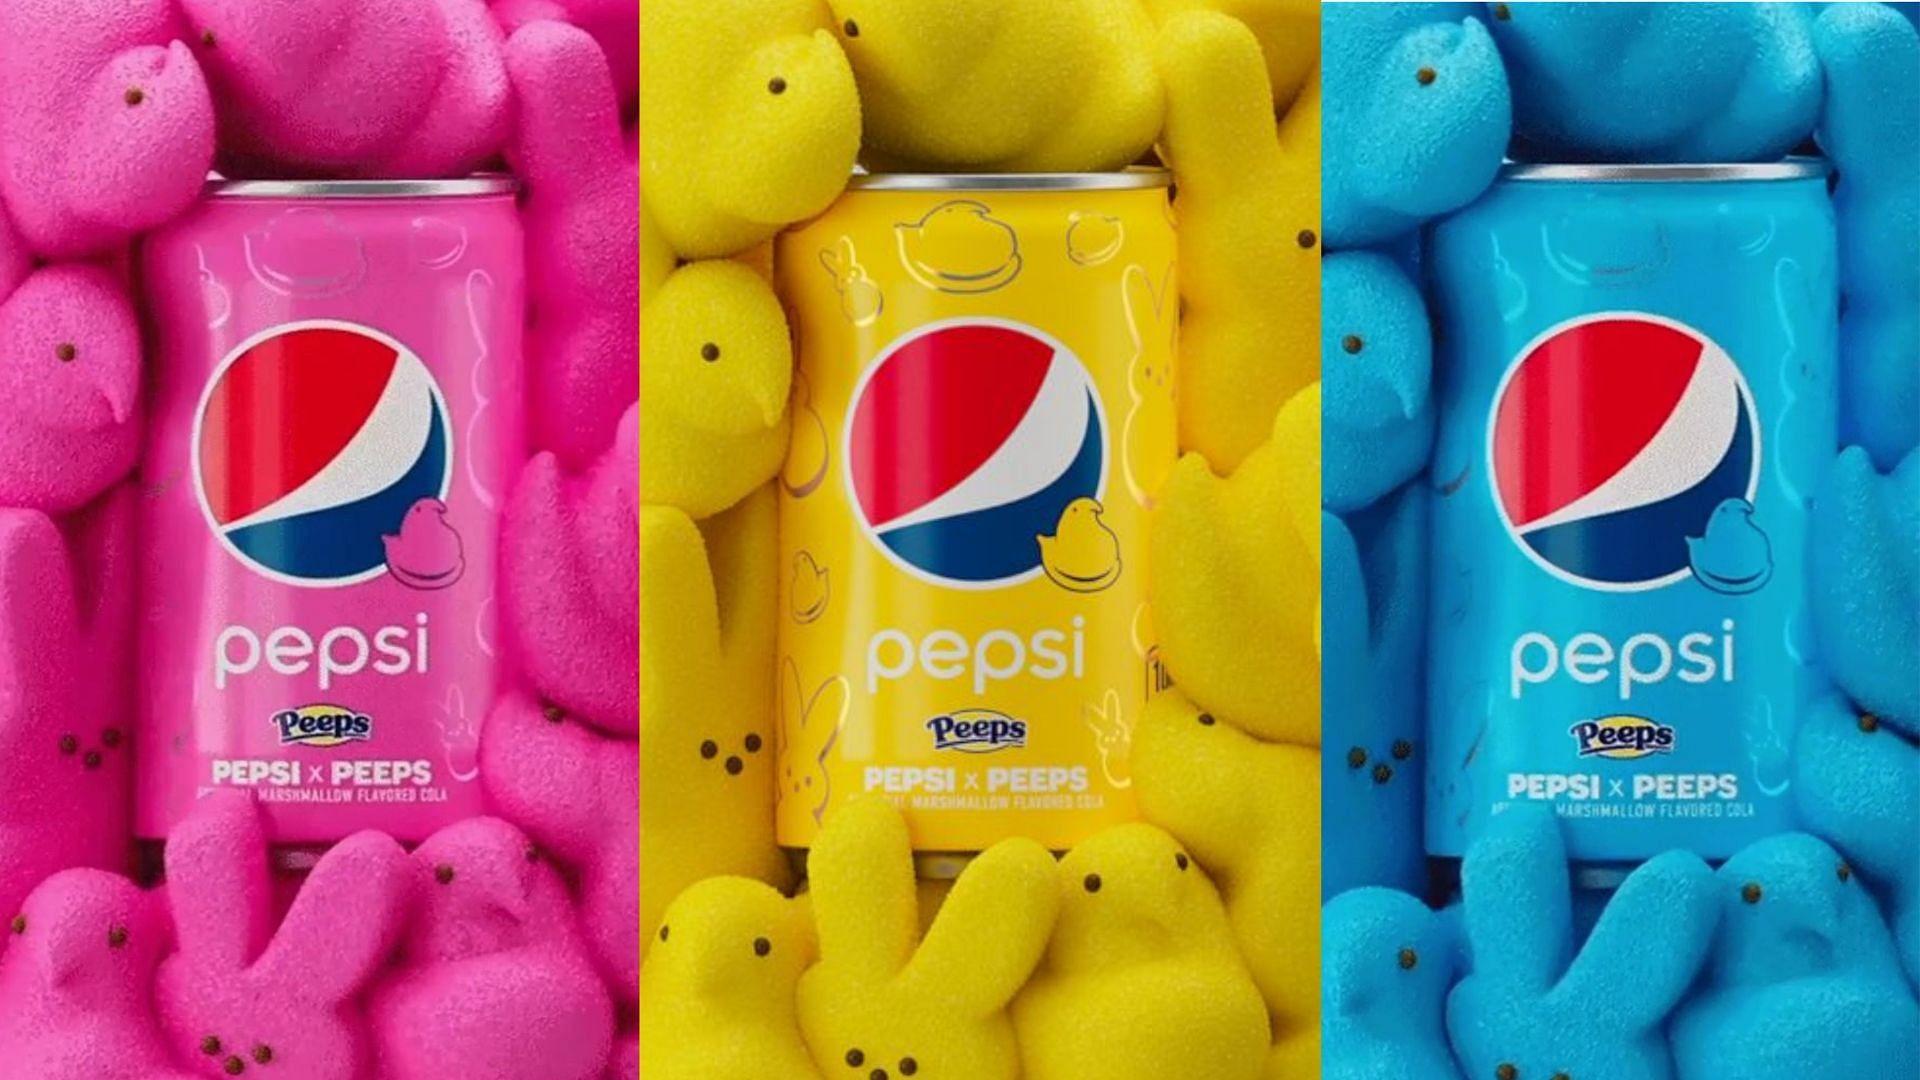 Pepsi Peeps soda offers flavorful drink to enjoy this spring (Image via Pepsi)